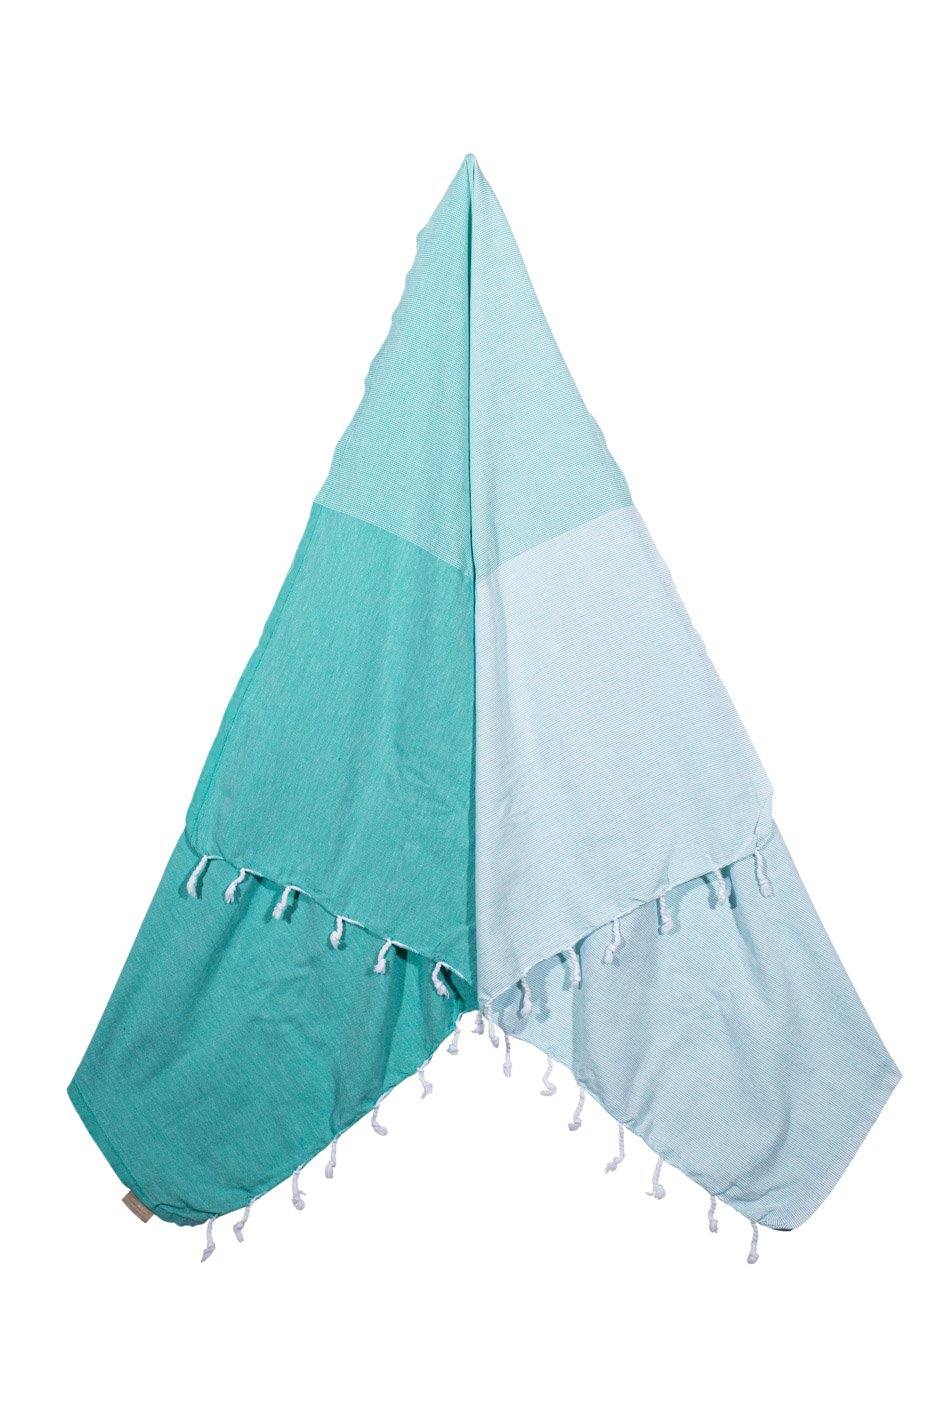 Dune - Green Lightweight Quick Drying Towel Hanging 